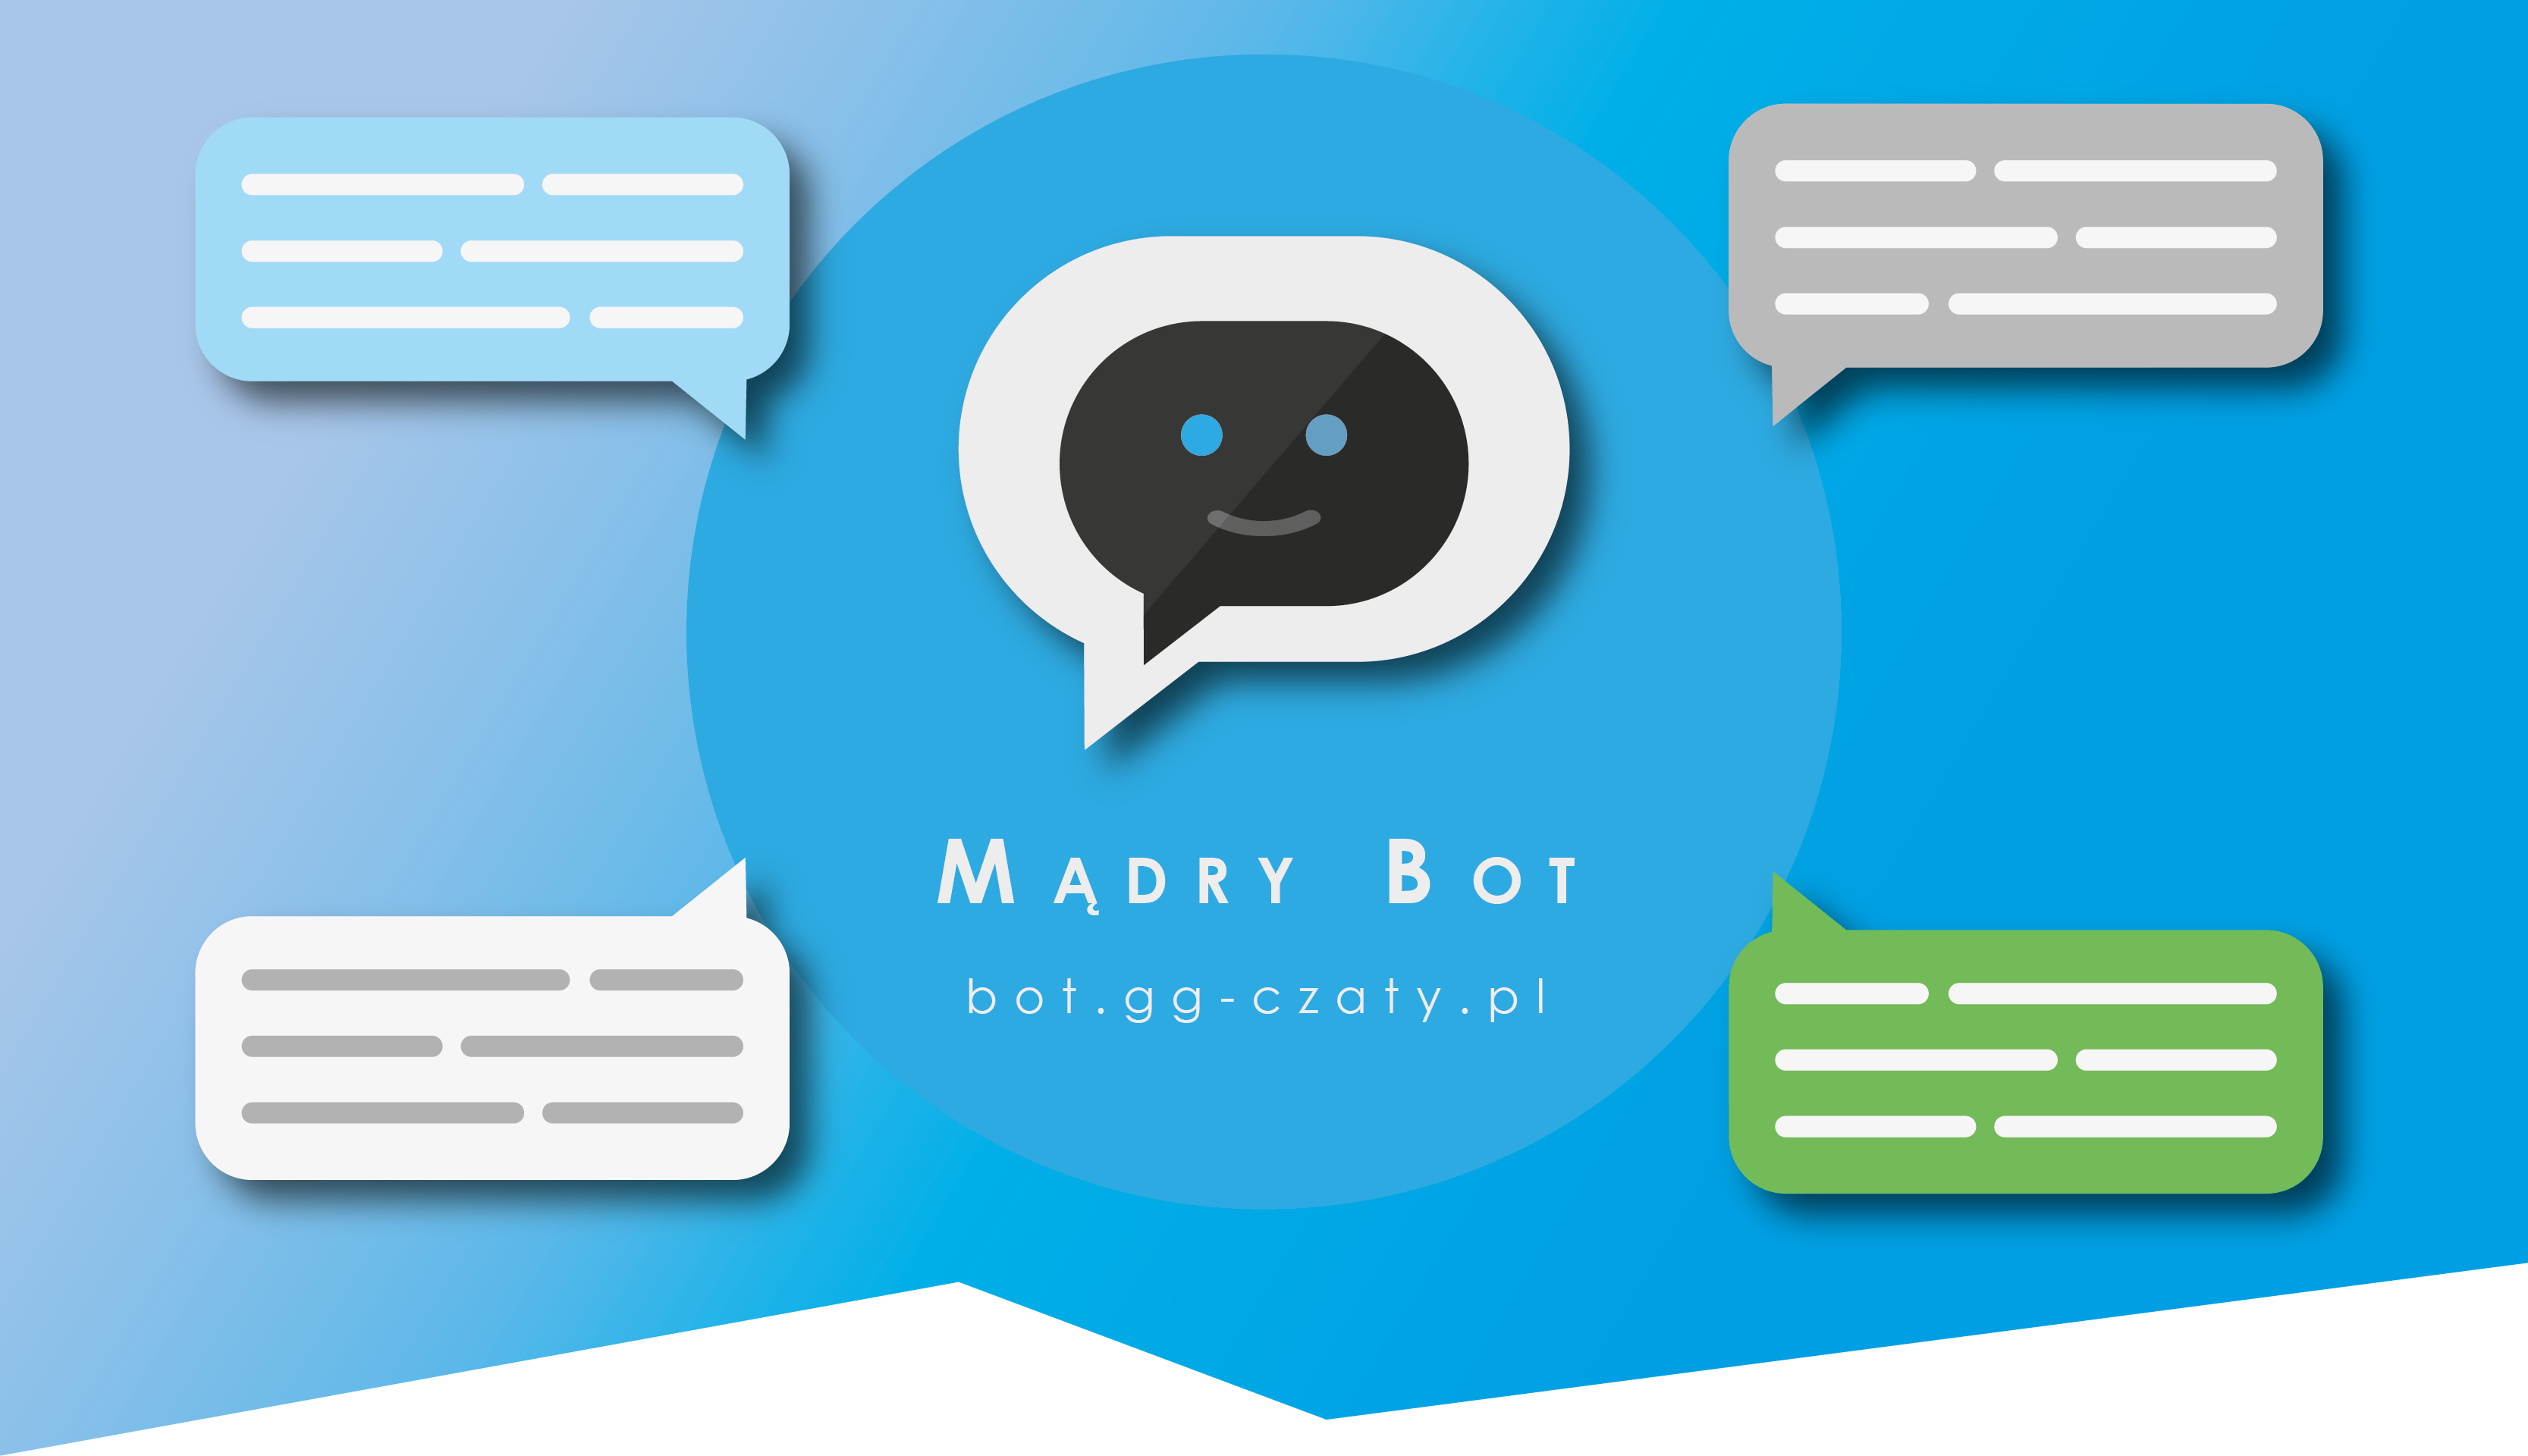 Mądry Bot - Rozmowa z botem (logo)